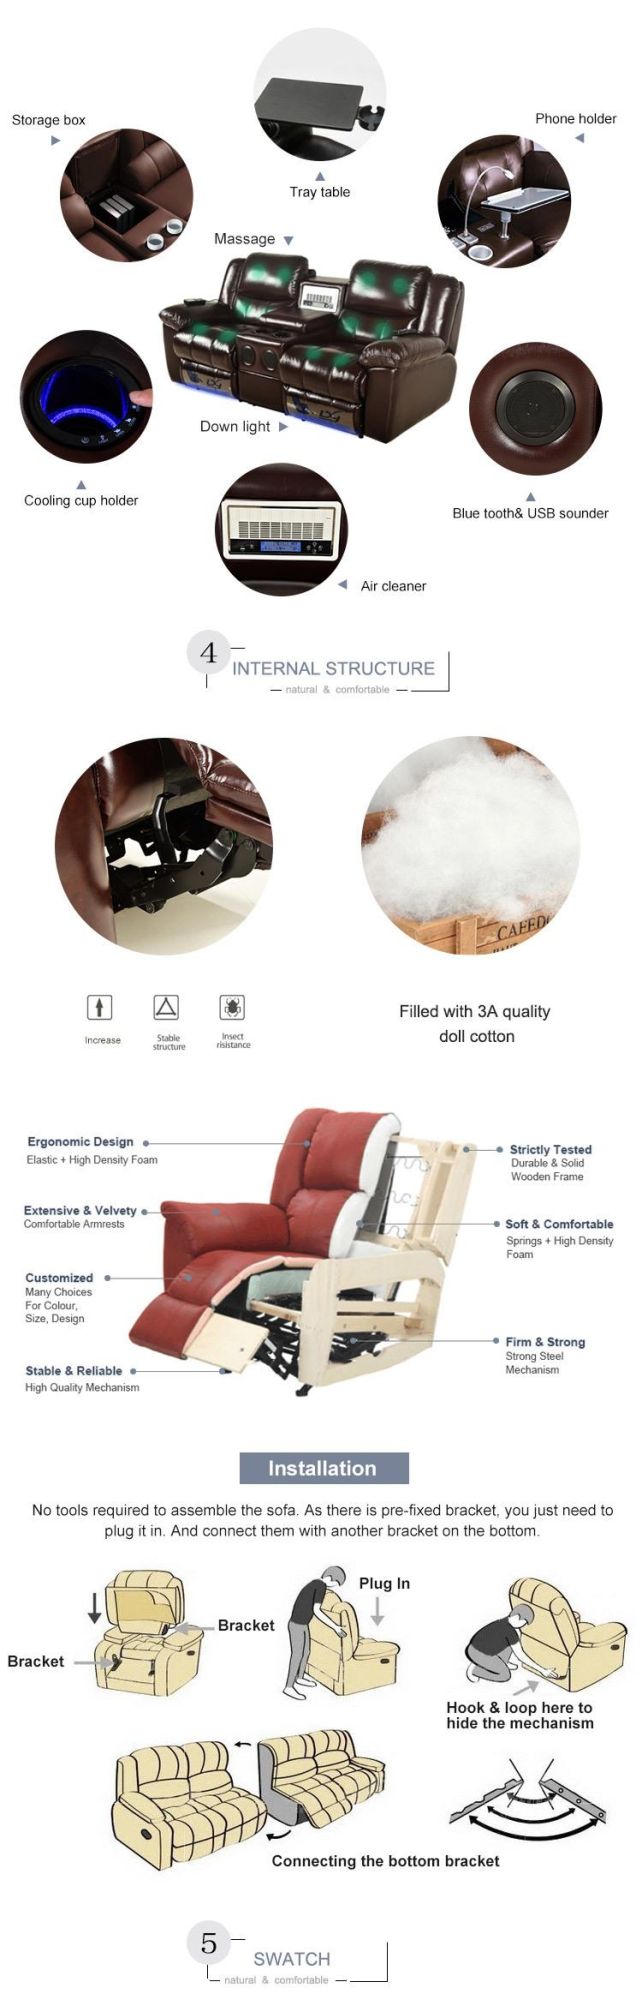 Furniture Sofa Living Room Luxury modern Sofa Set for Sale